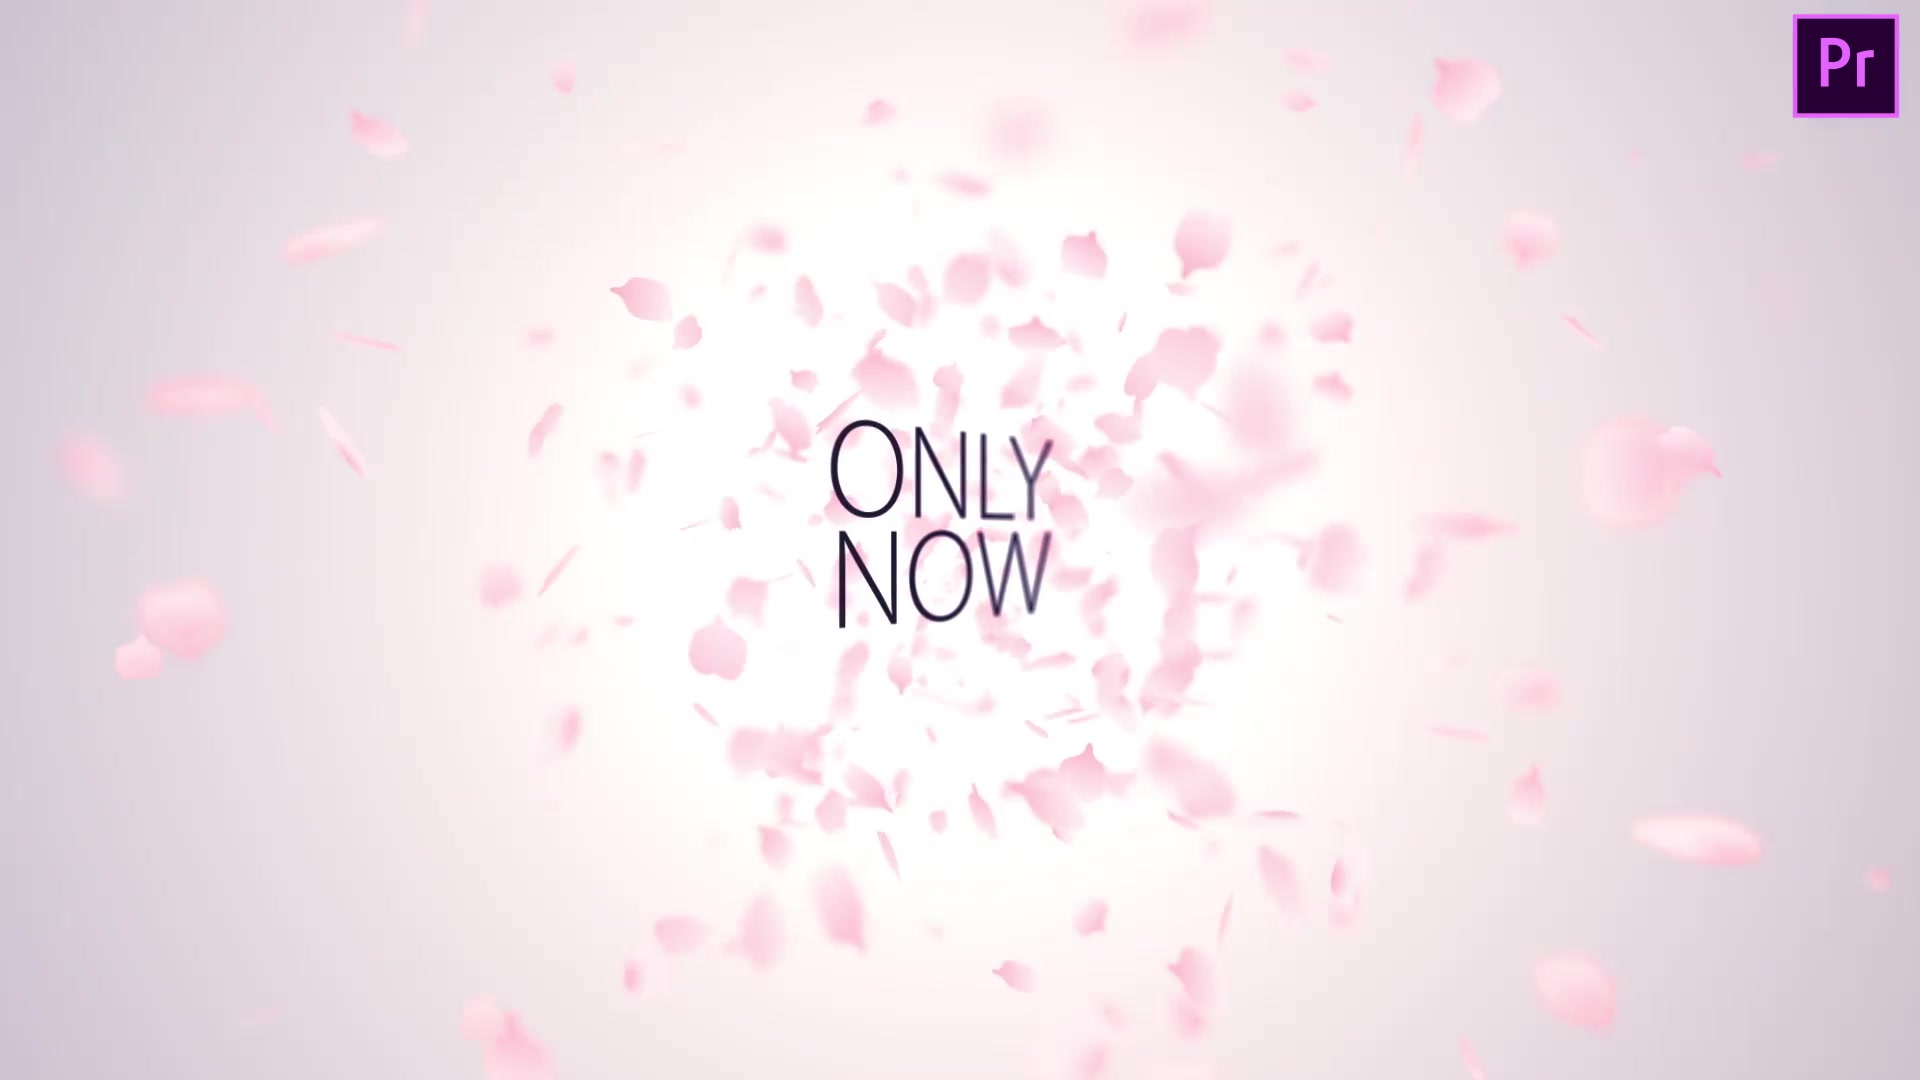 Japan Style Intro Romantic Titles Animation Promo Premiere Pro Videohive 34096420 Premiere Pro Image 4